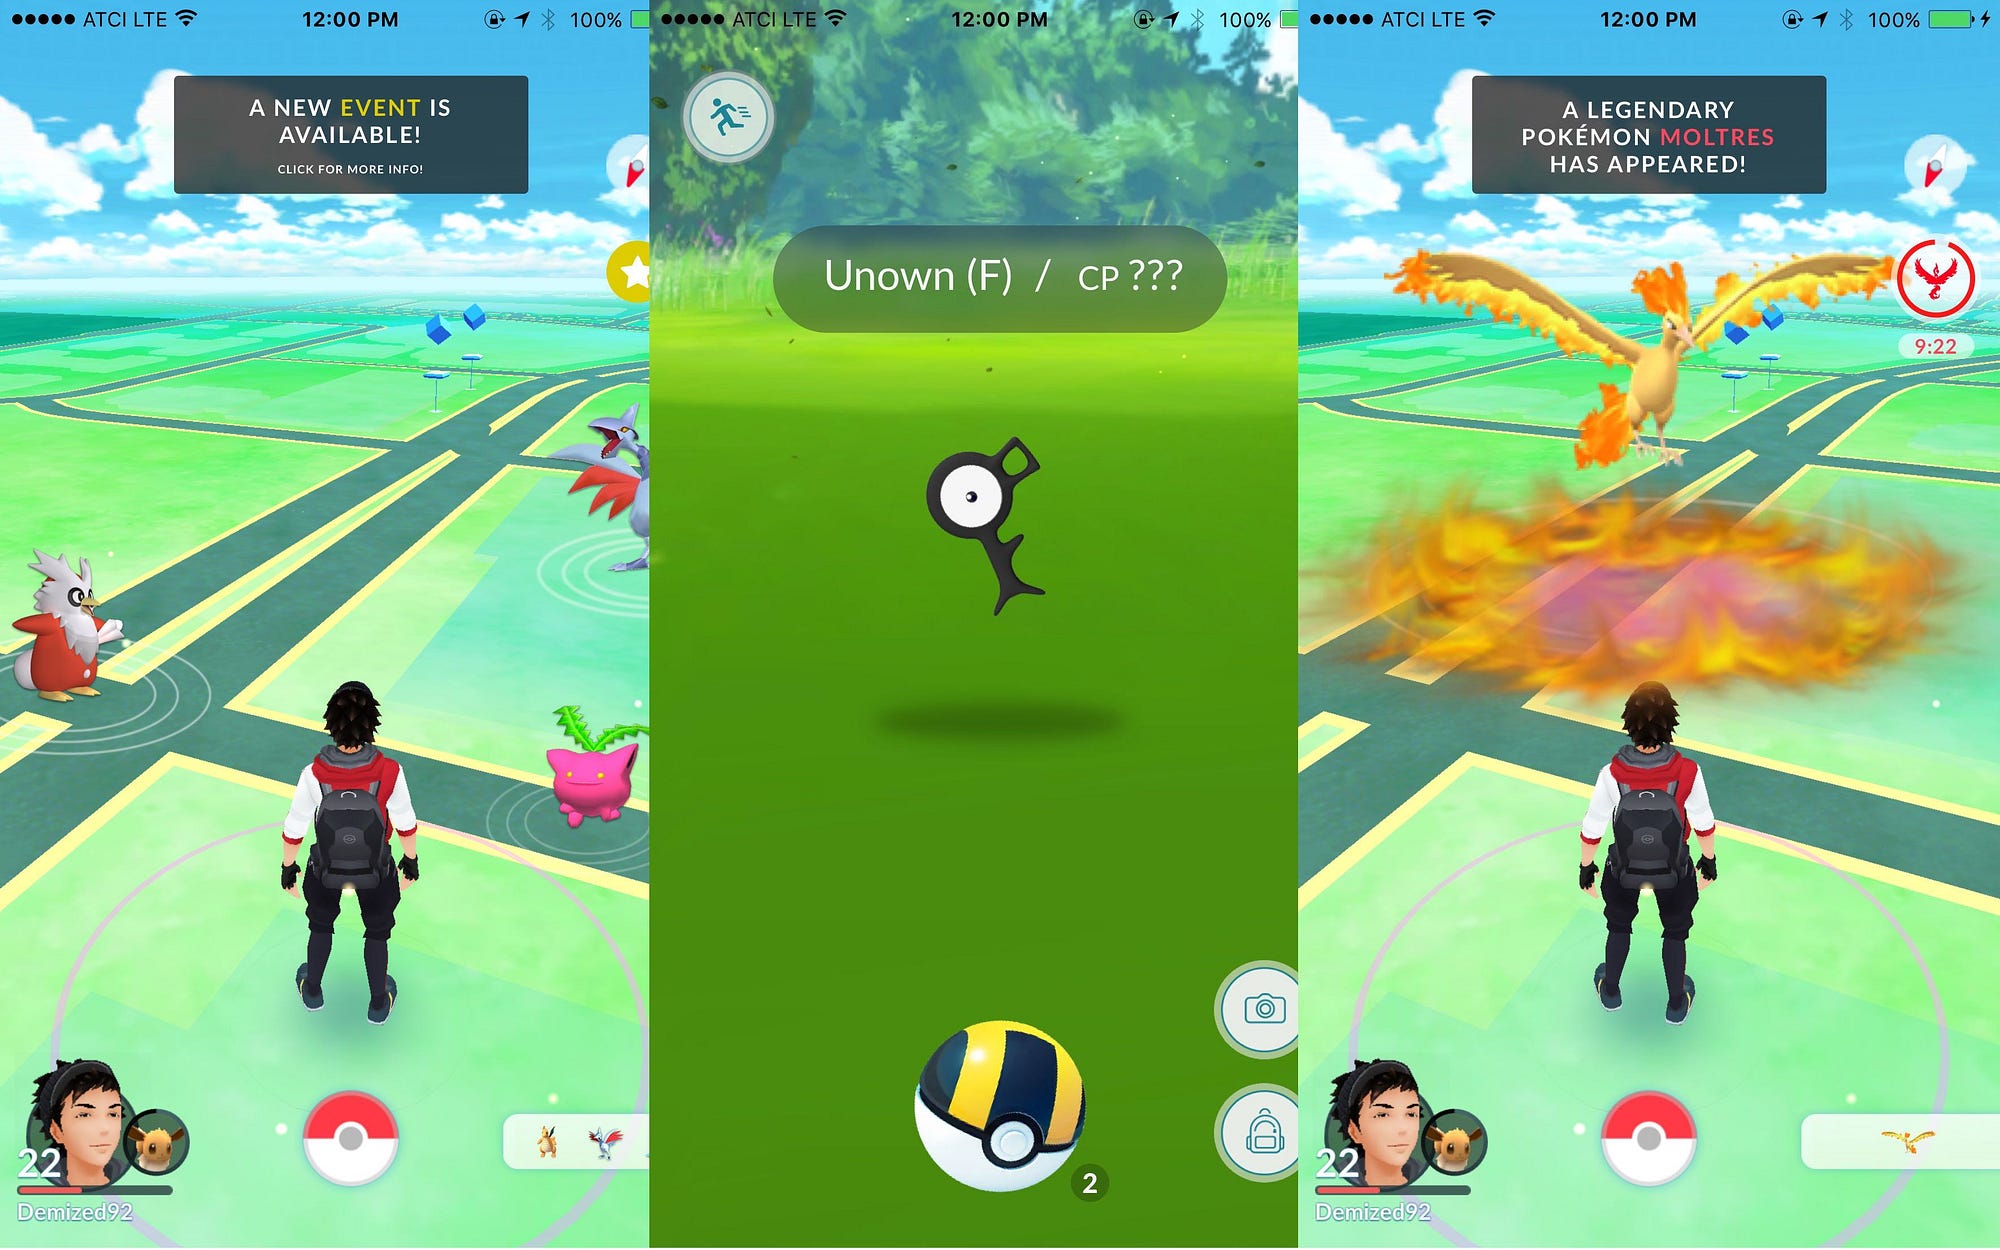 Pokémon GO - Unown Events